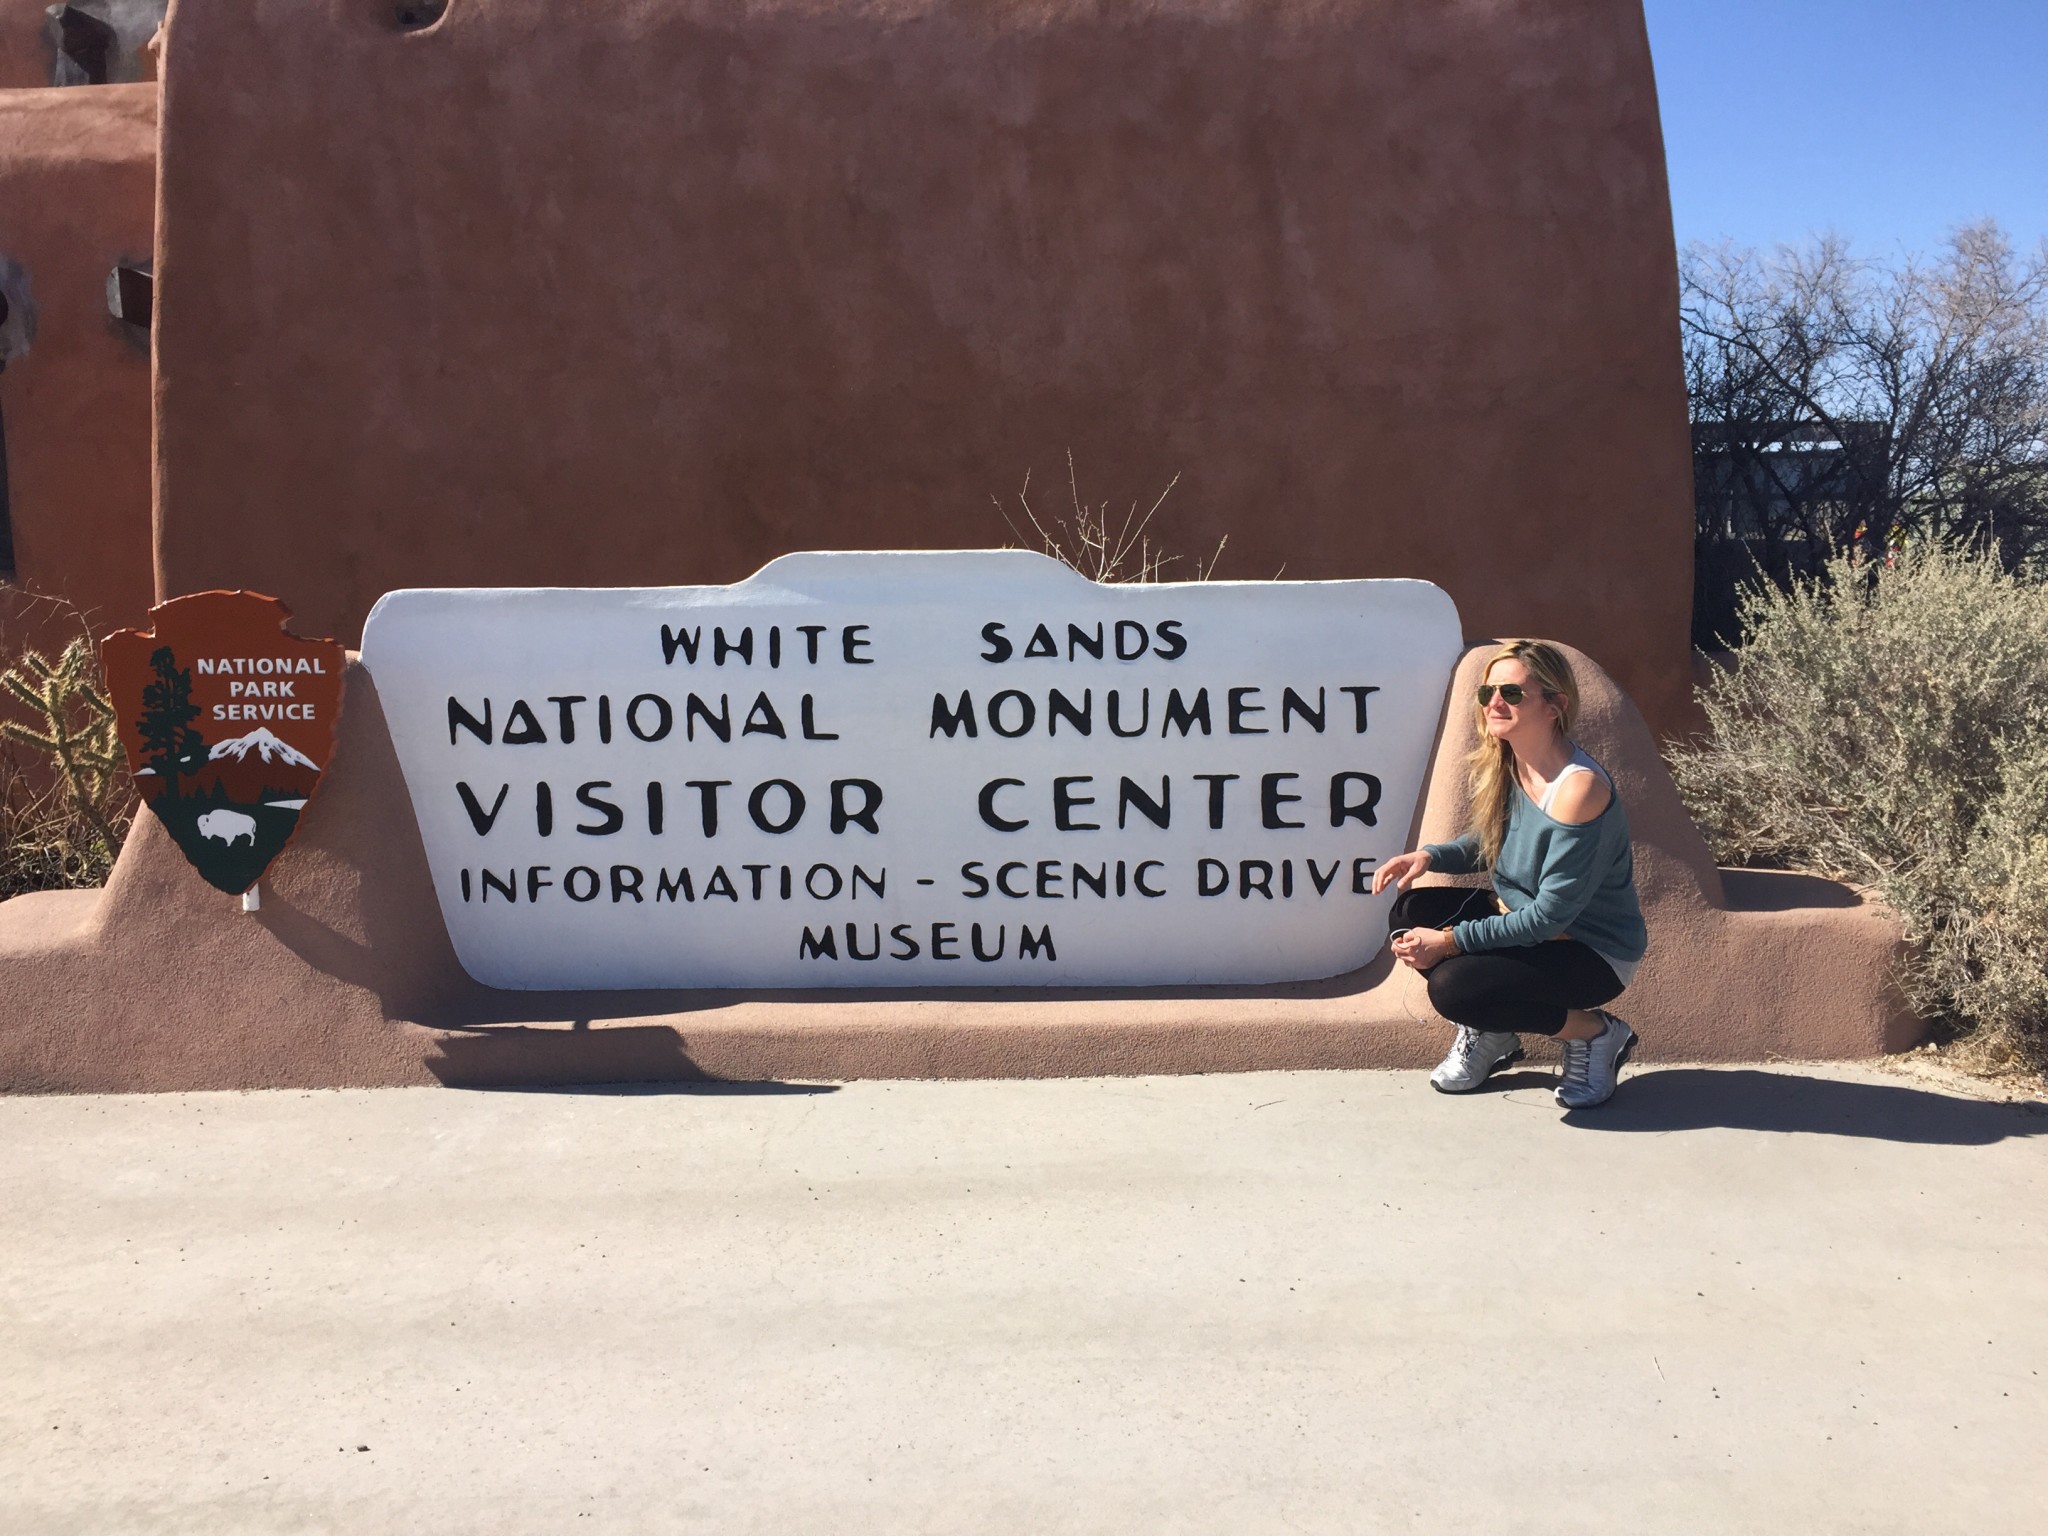 Benvenuti alle White Sands National Park